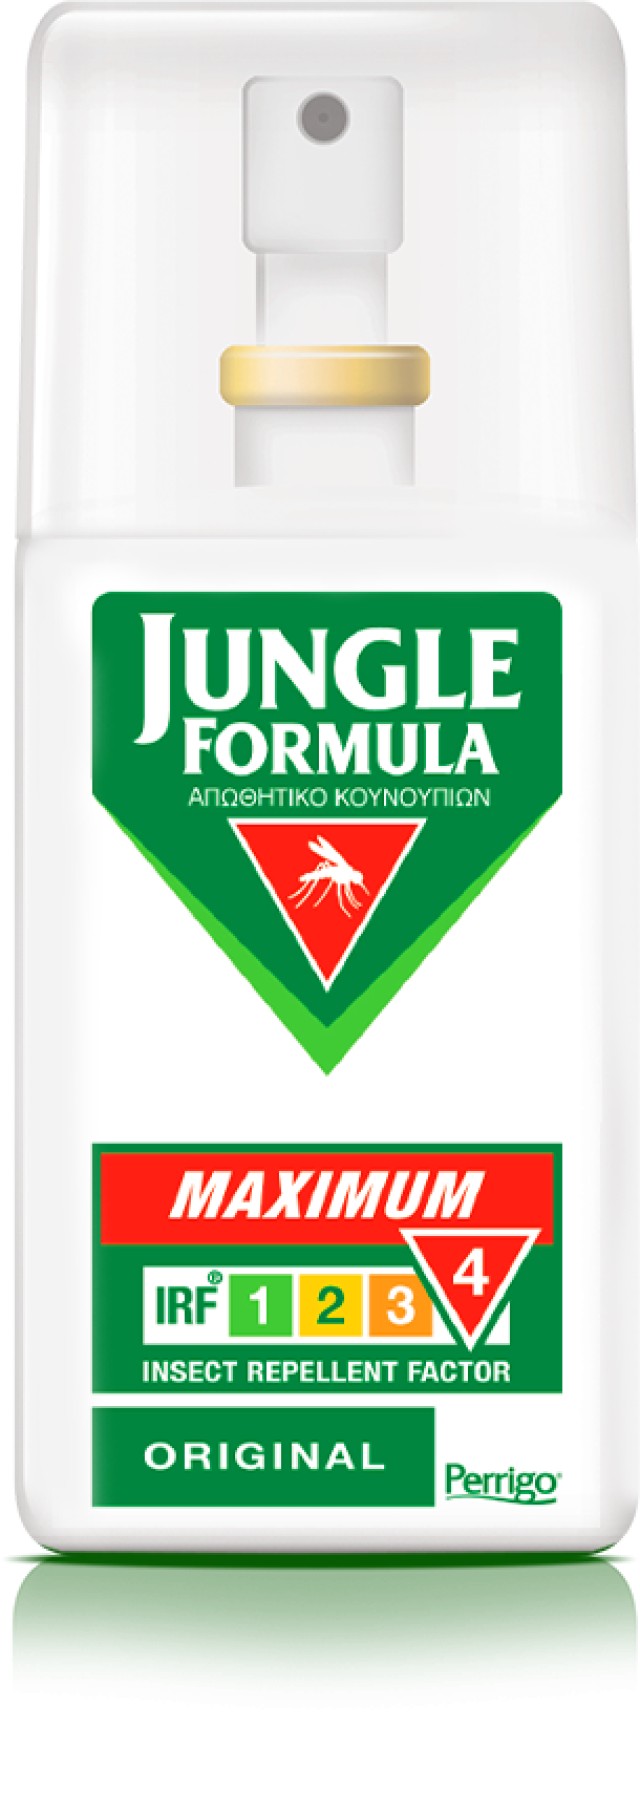 Jungle Formula Maximum Original με IRF 4 75ml product photo